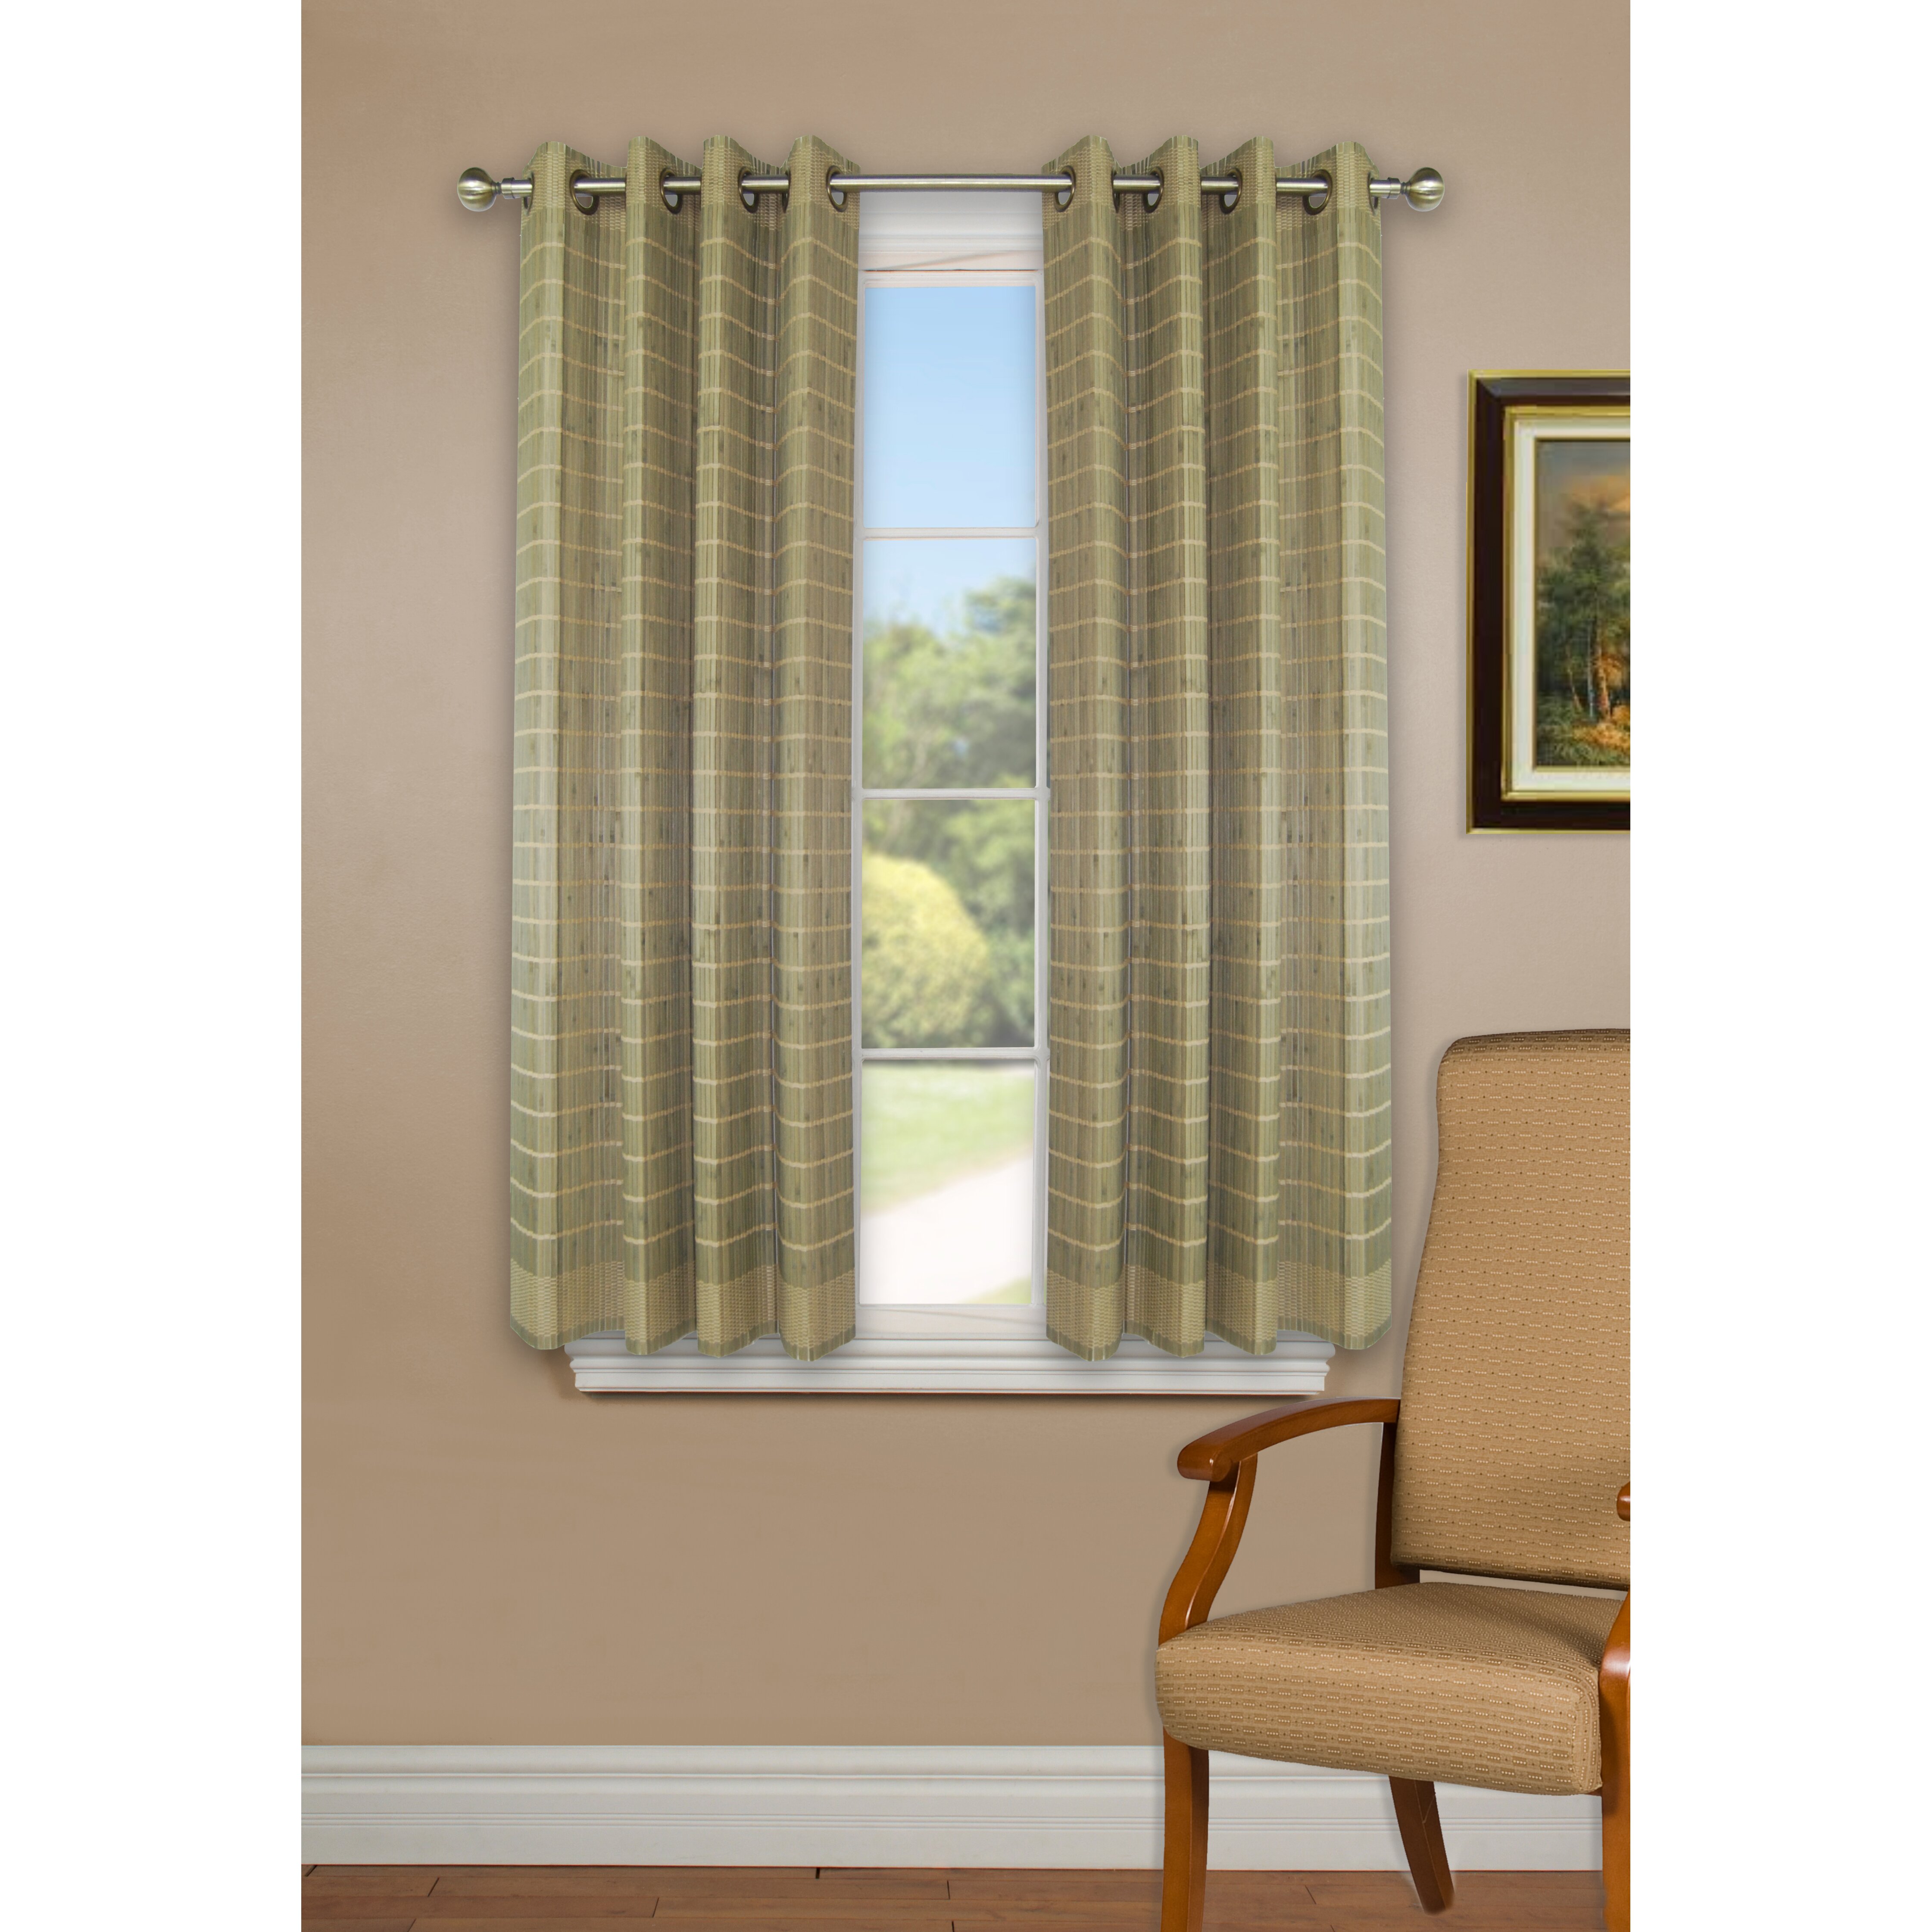 How To Build A Curtain Drain Sunbrella Outdoor Curtai